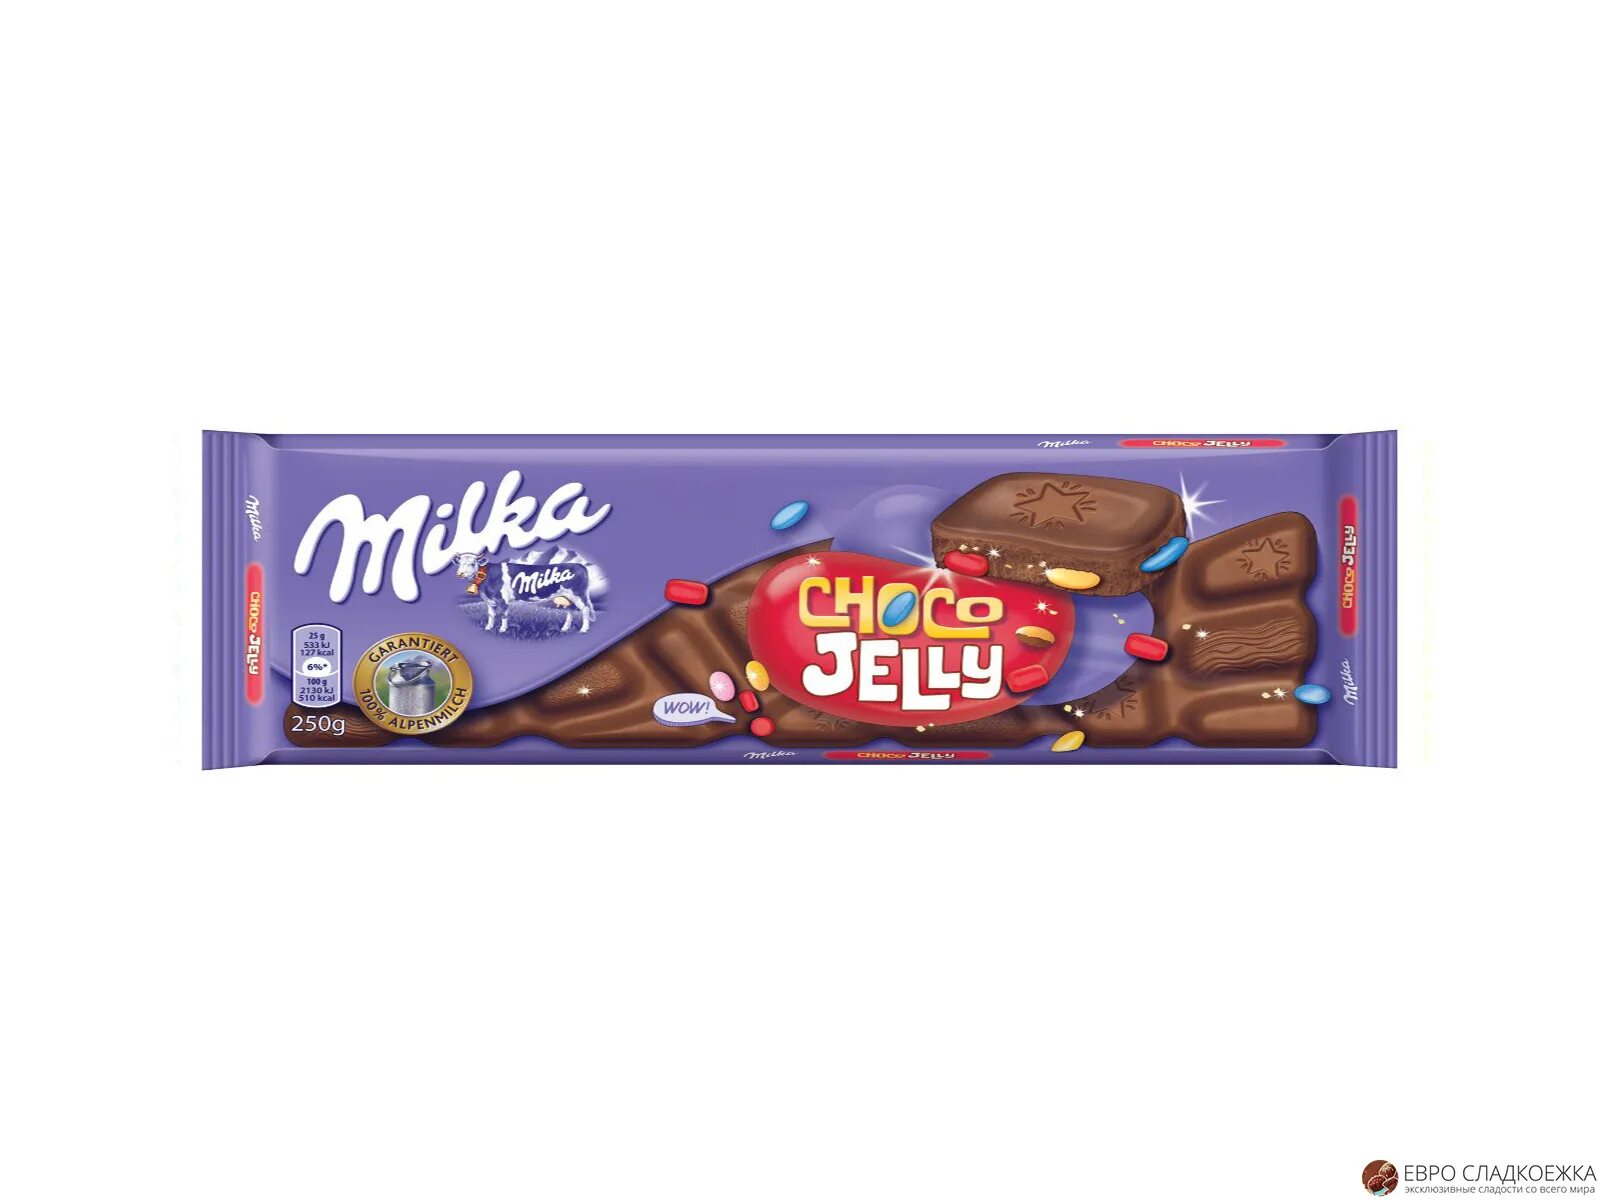 Milka jelly. Milka 250гр Чоко-Джелли. Милка Чоко Джелли 250 гр. Milka Choco Jelly. Шоколад Милка Макс Чоко Джелли 250г.